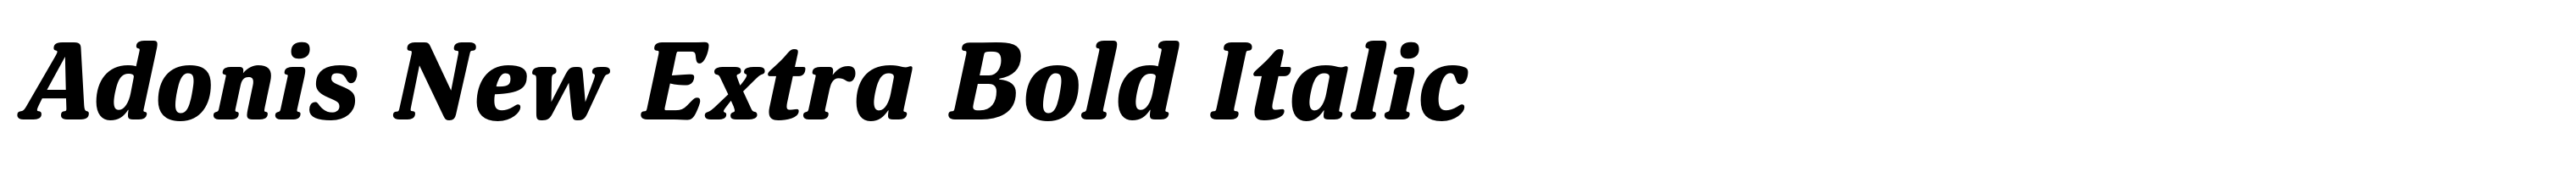 Adonis New Extra Bold Italic